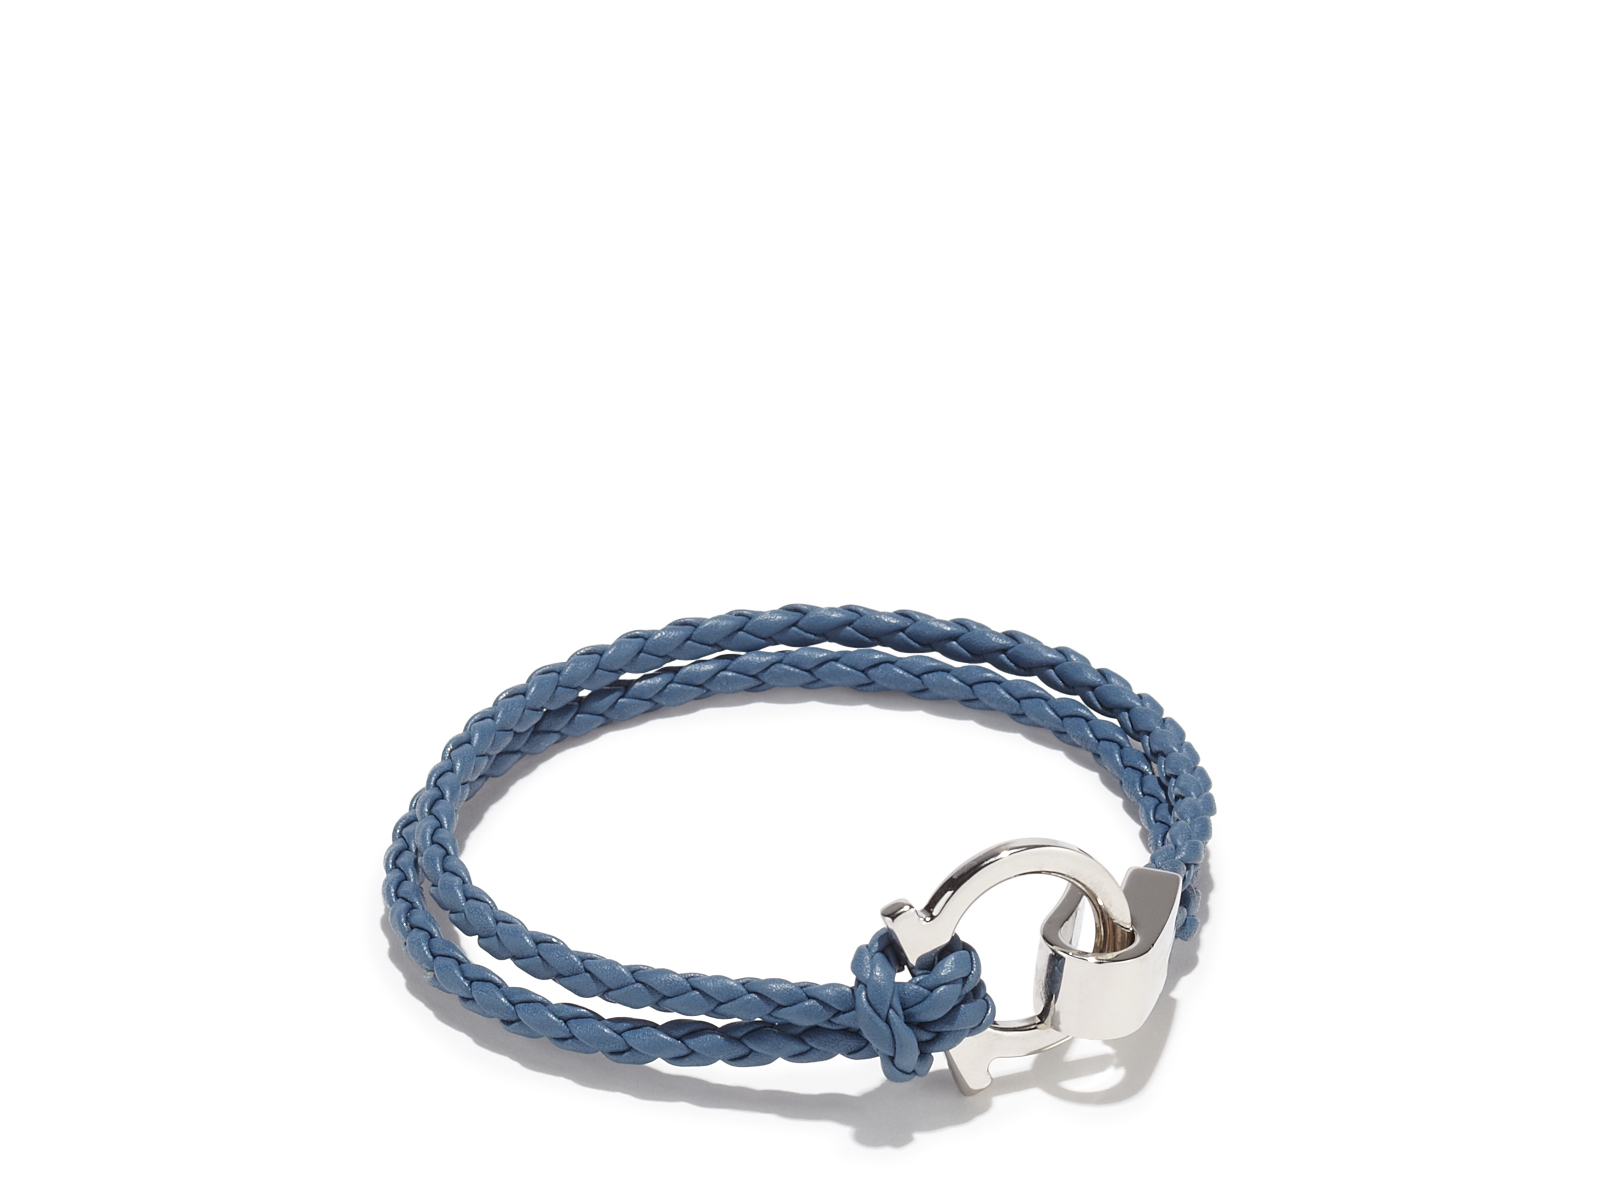 Ferragamo Braided Leather Bracelet With Gancini Hook Closure in Blue ...